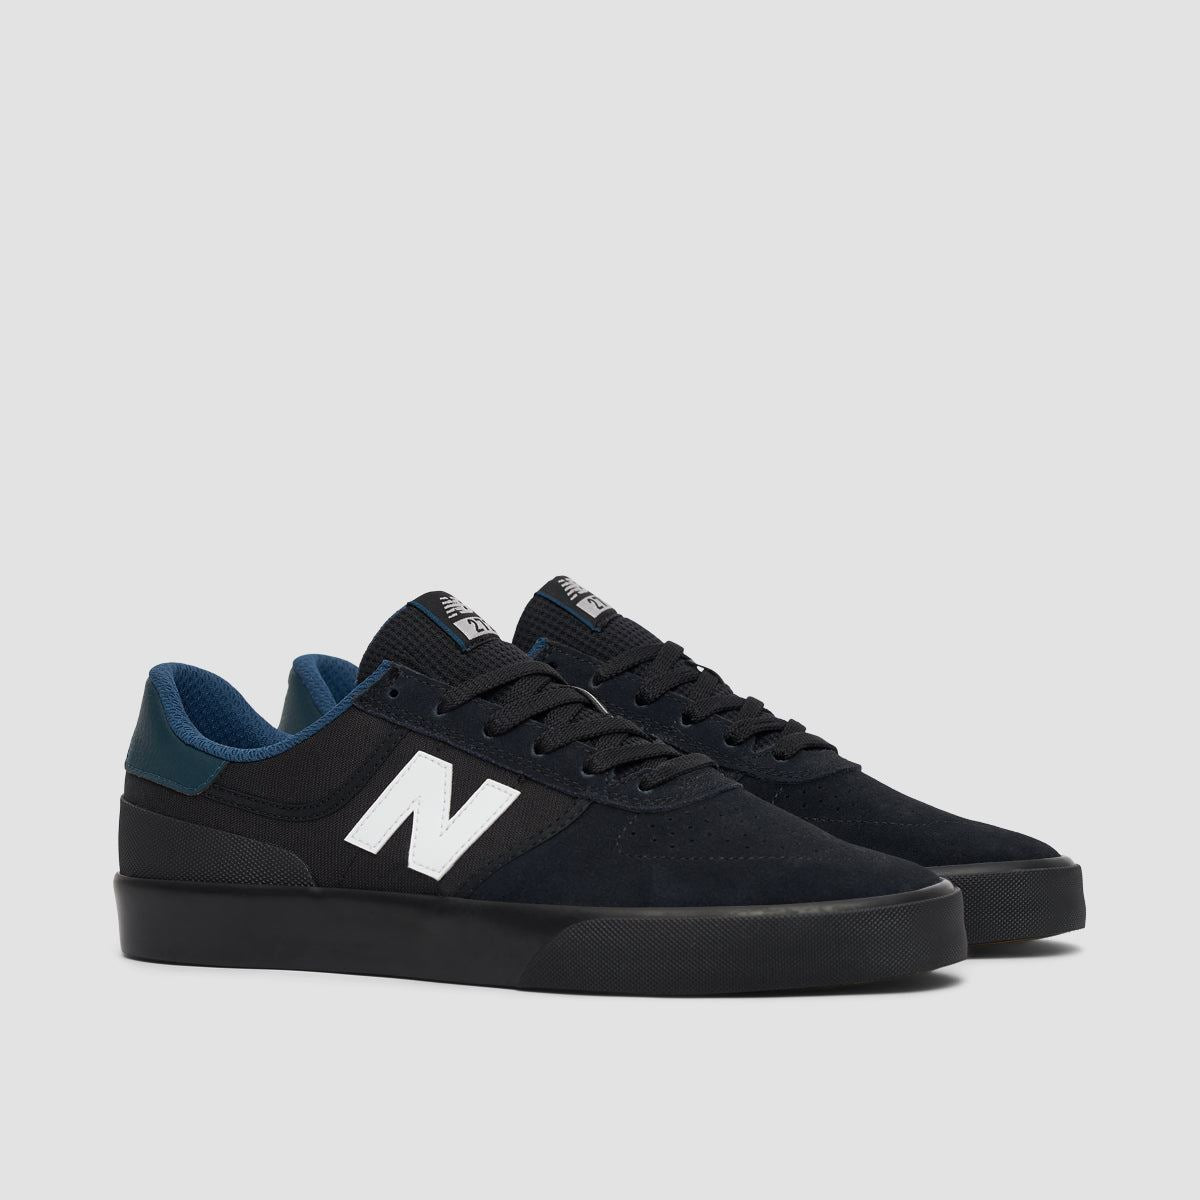 New Balance Numeric 272 V1 Shoes - Black/White